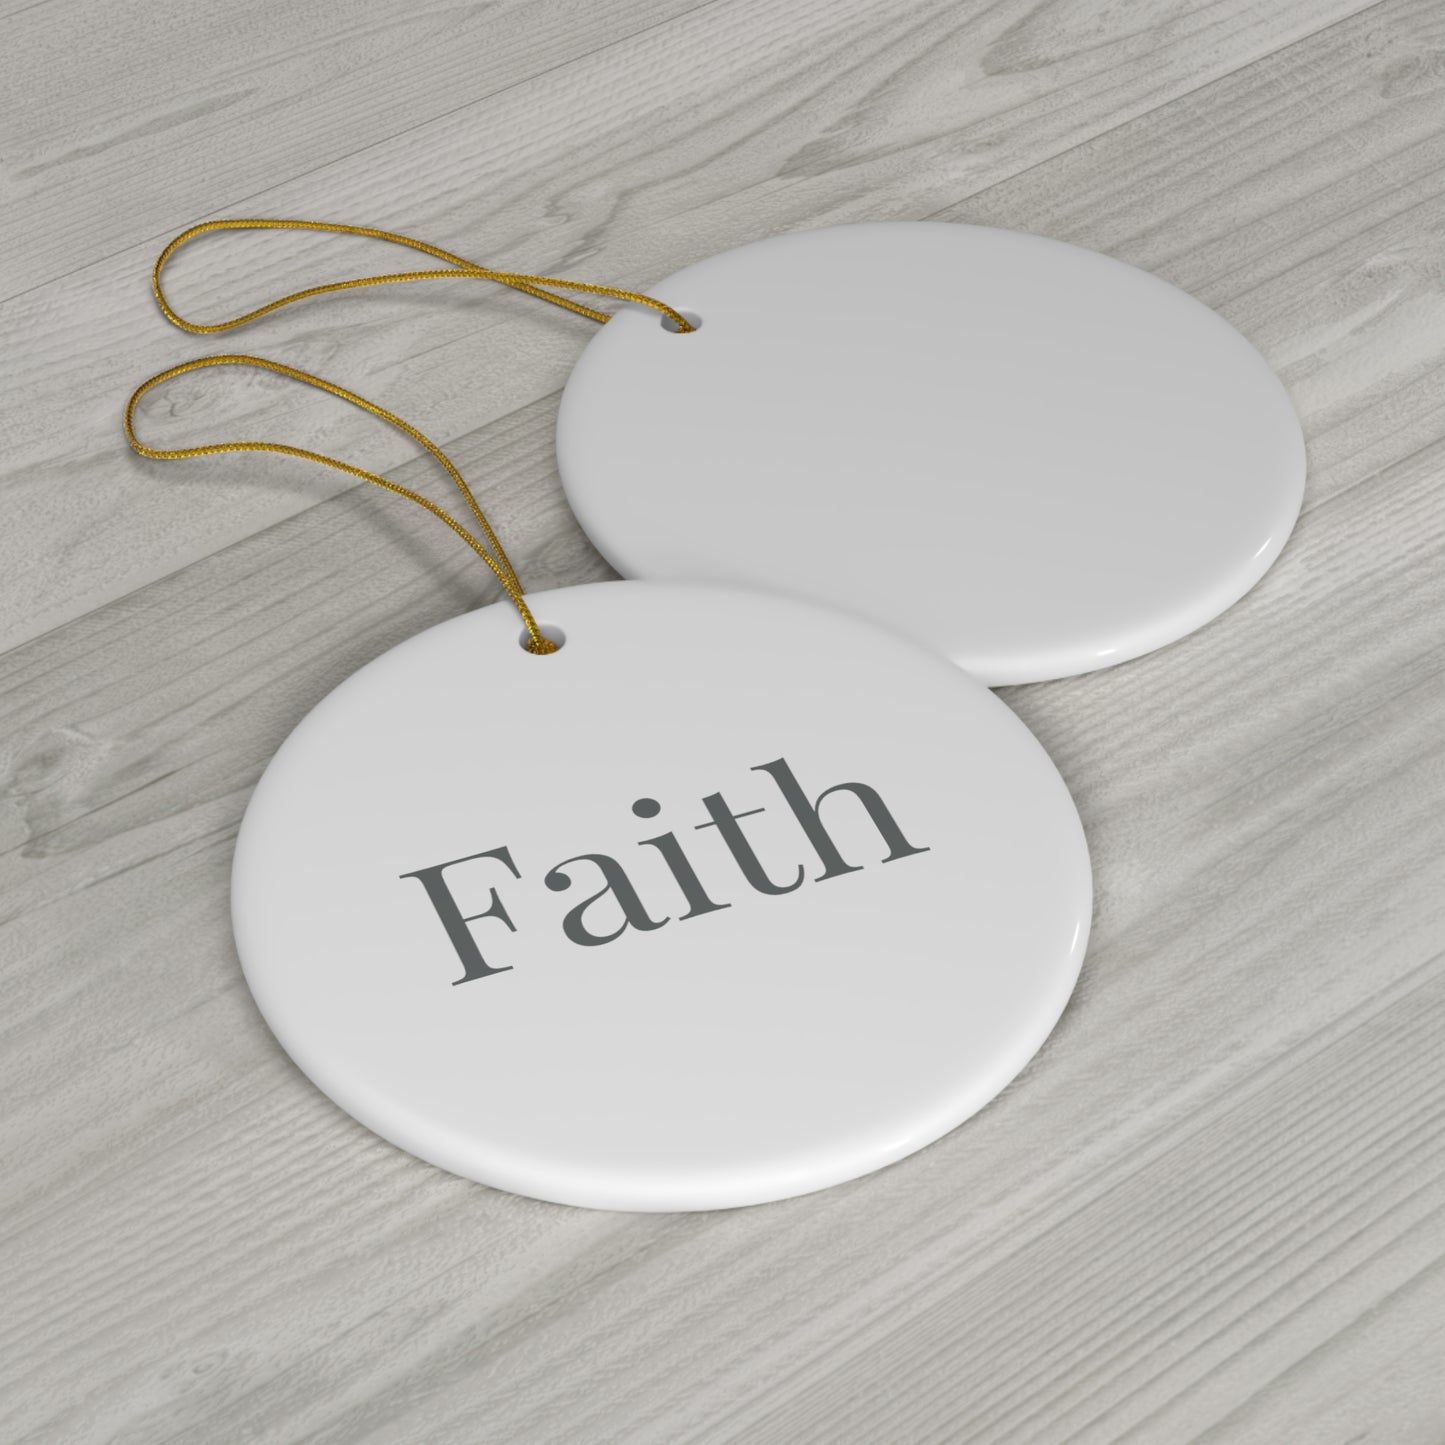 Faith Ceramic Ornament, 4 Shapes